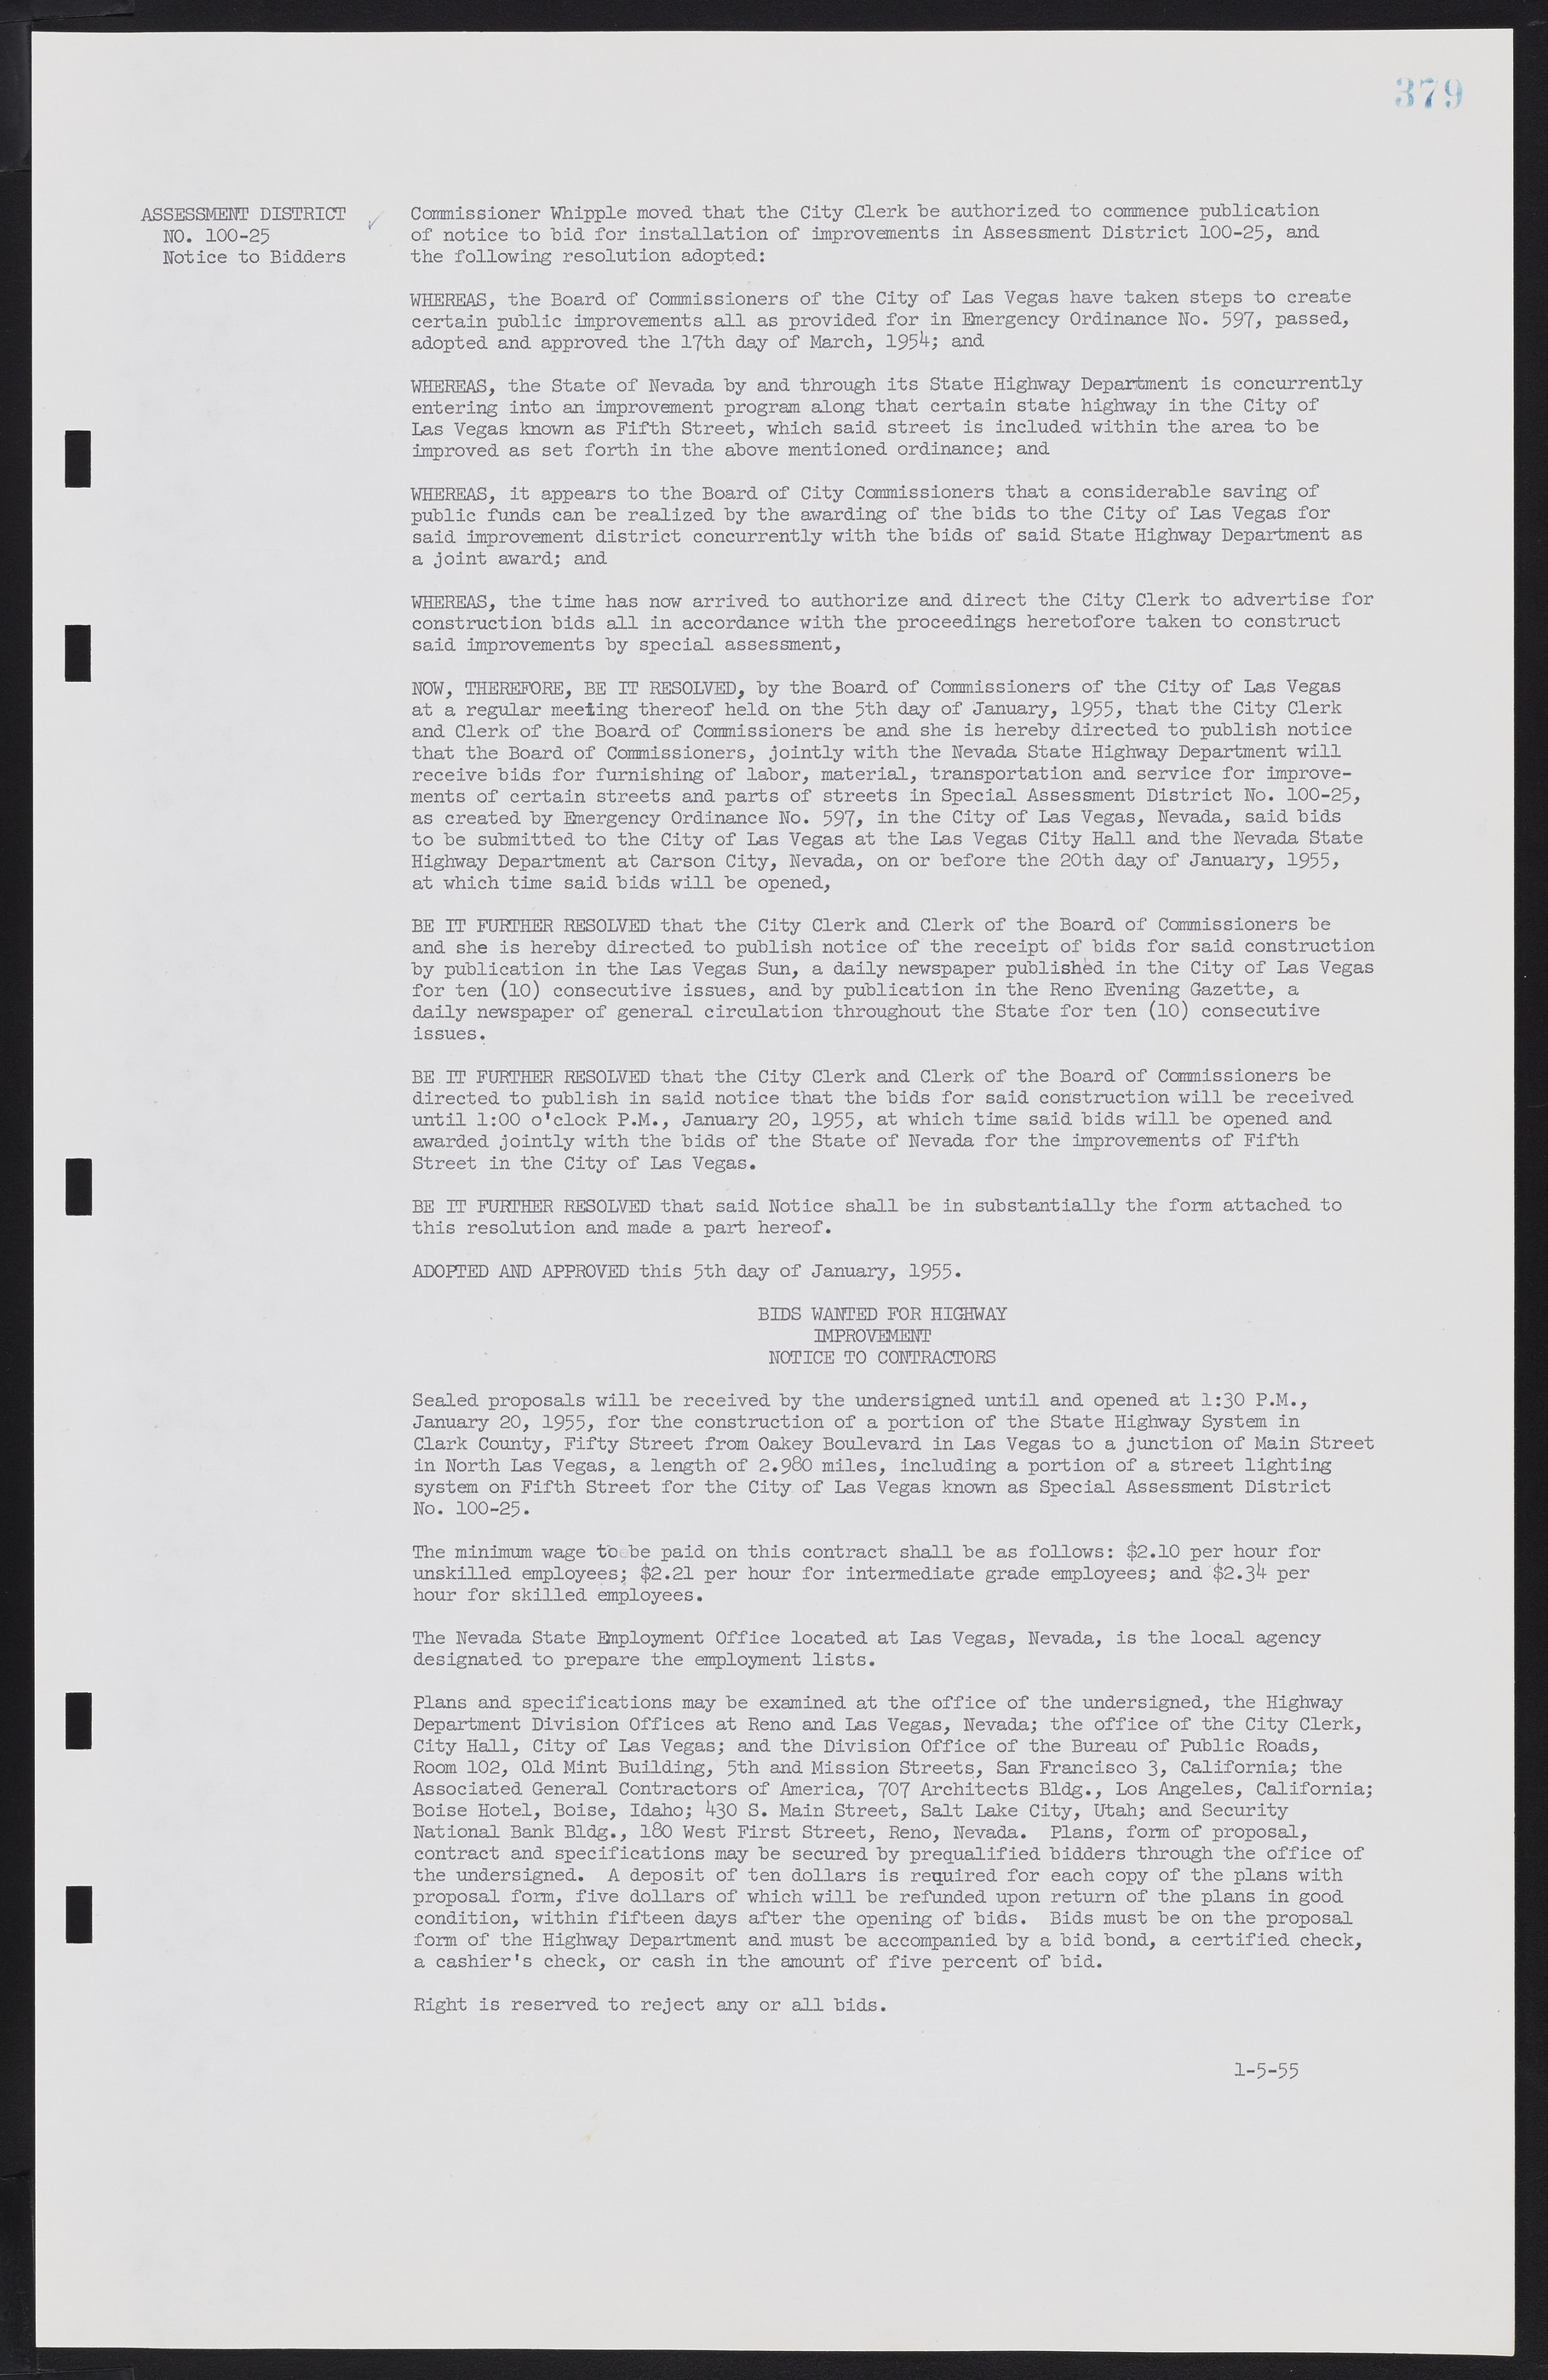 Las Vegas City Commission Minutes, February 17, 1954 to September 21, 1955, lvc000009-385